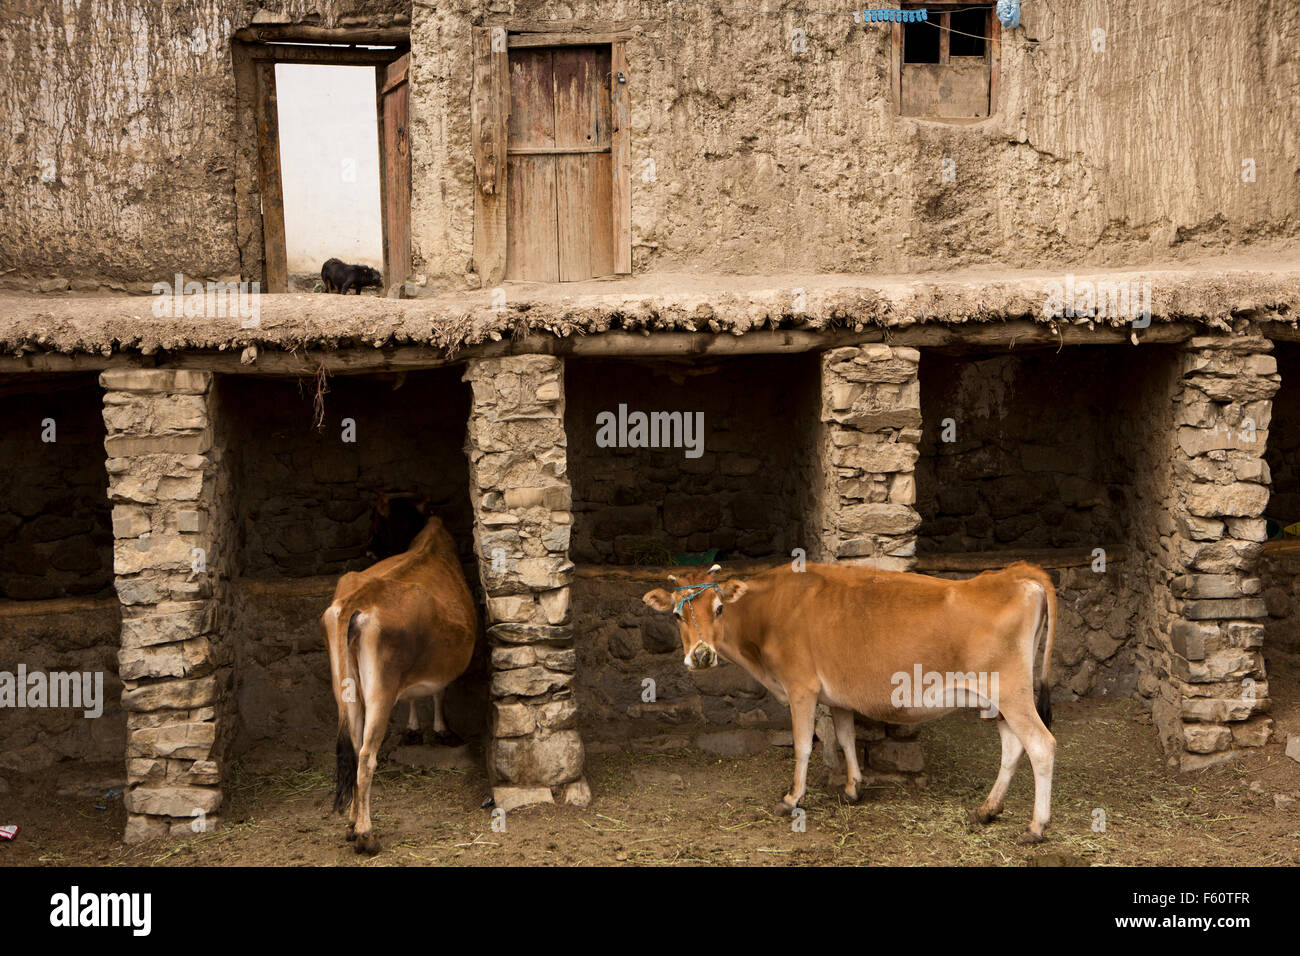 India, Himachal Pradesh, Spiti, Kaza, urban dairy cattle in new town centre house courtyard Stock Photo